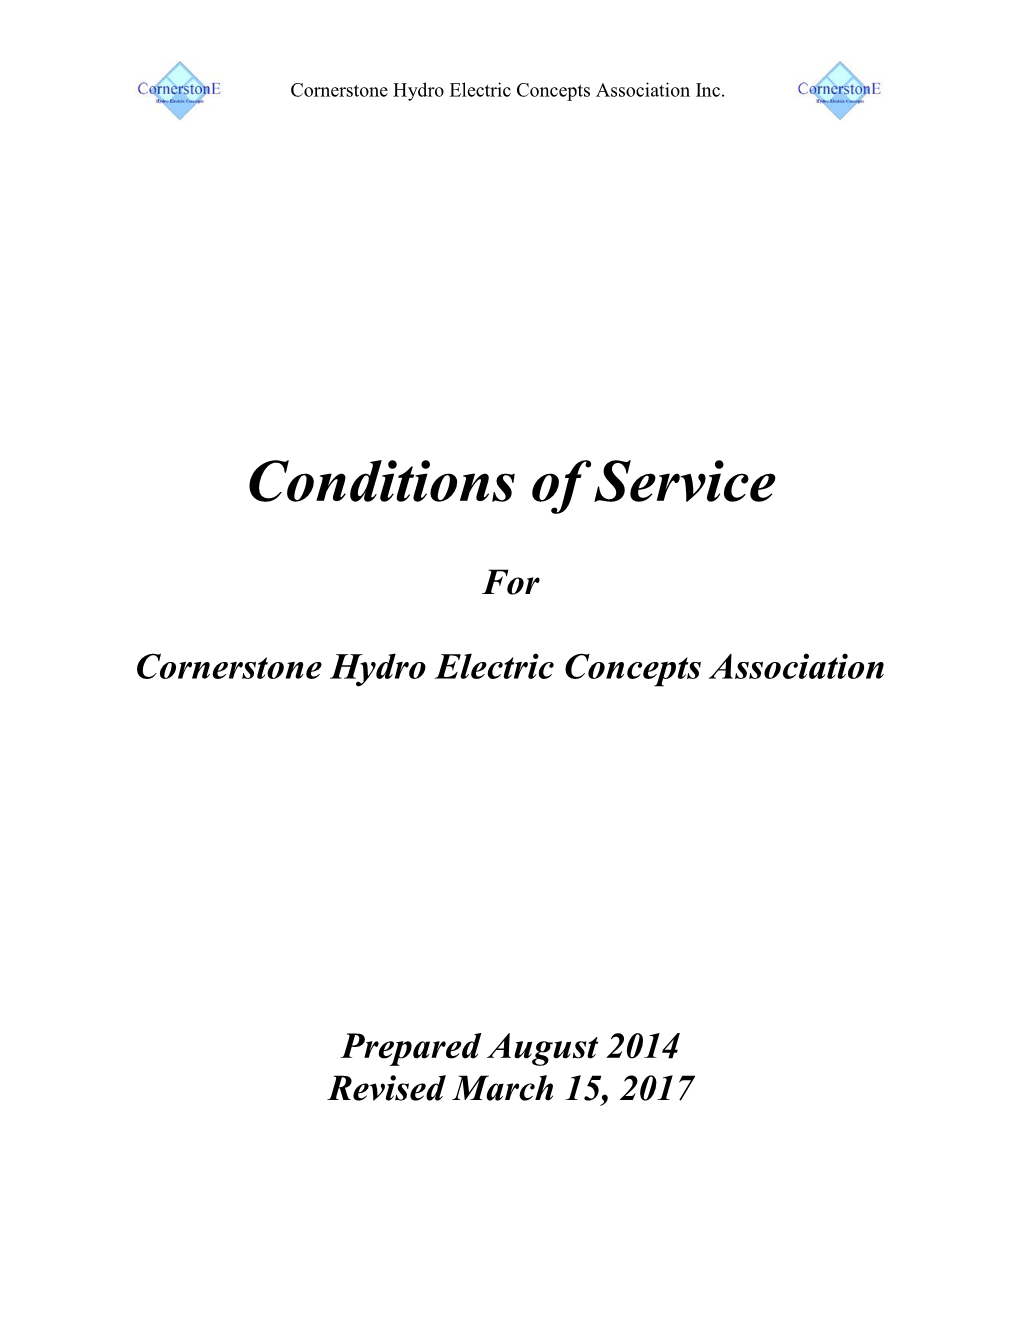 Cornerstone CONDITIONS of SERVICE